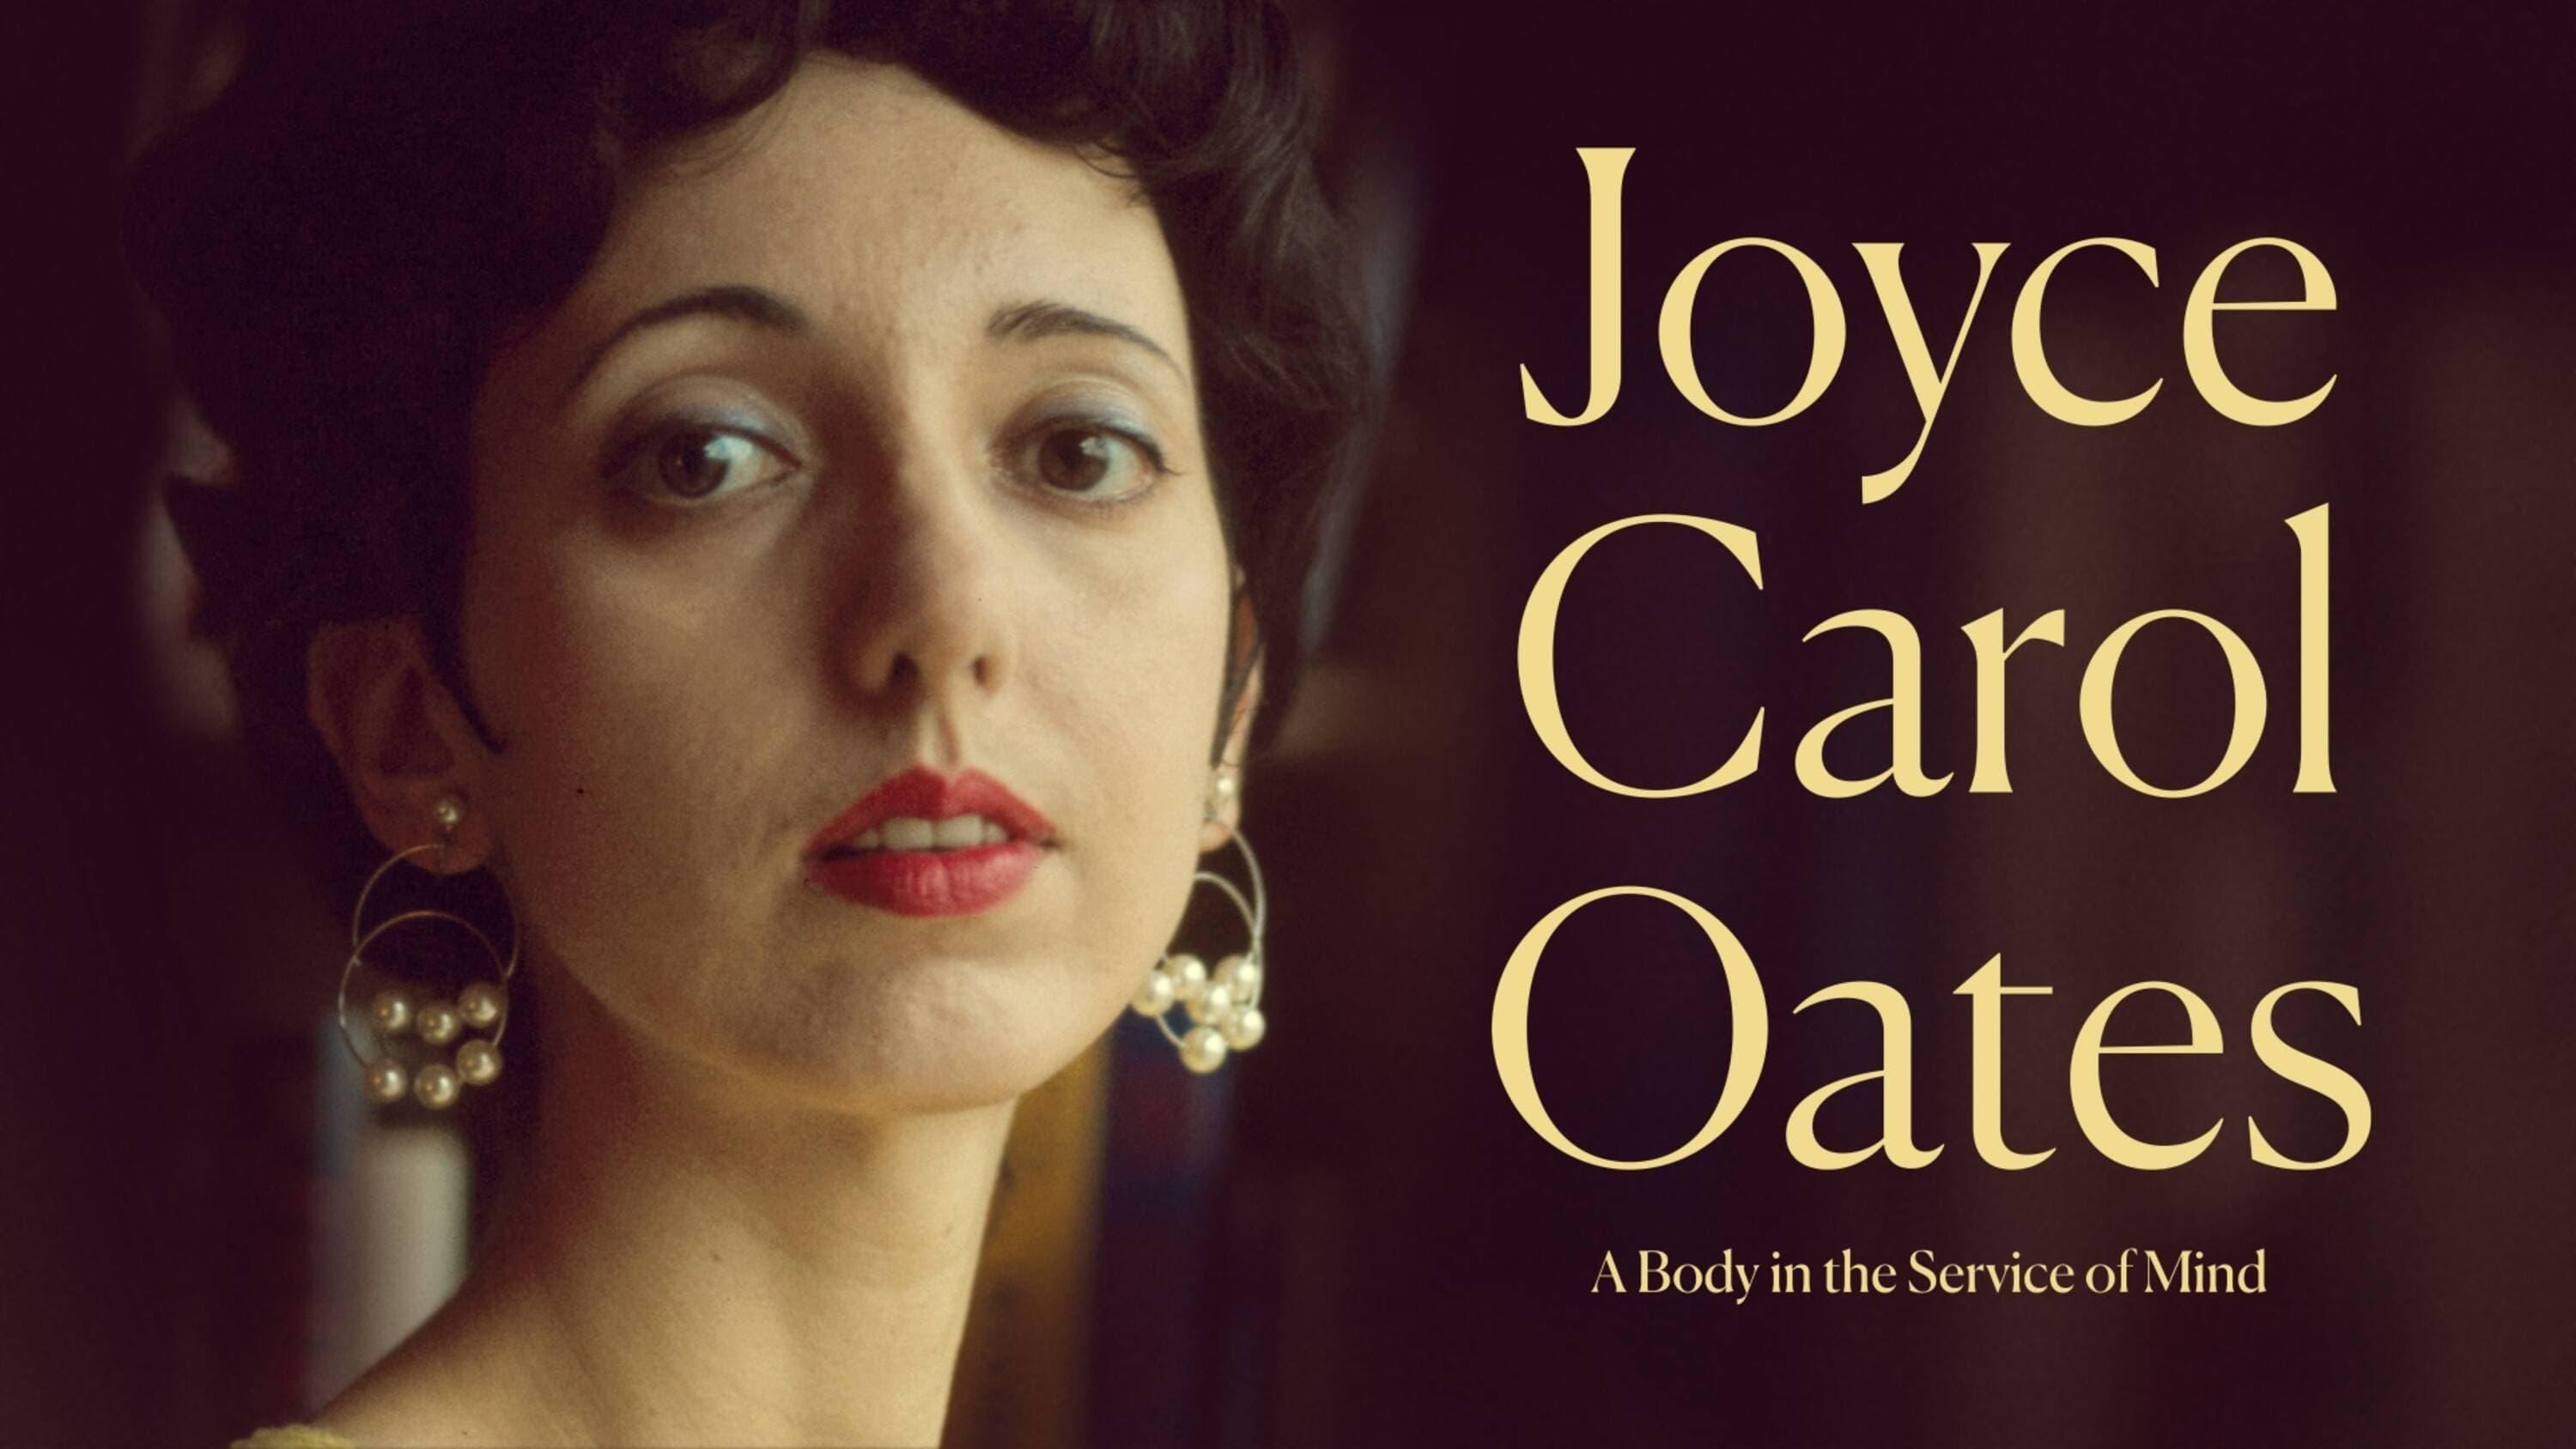 Joyce Carol Oates: A Body in the Service of Mind backdrop